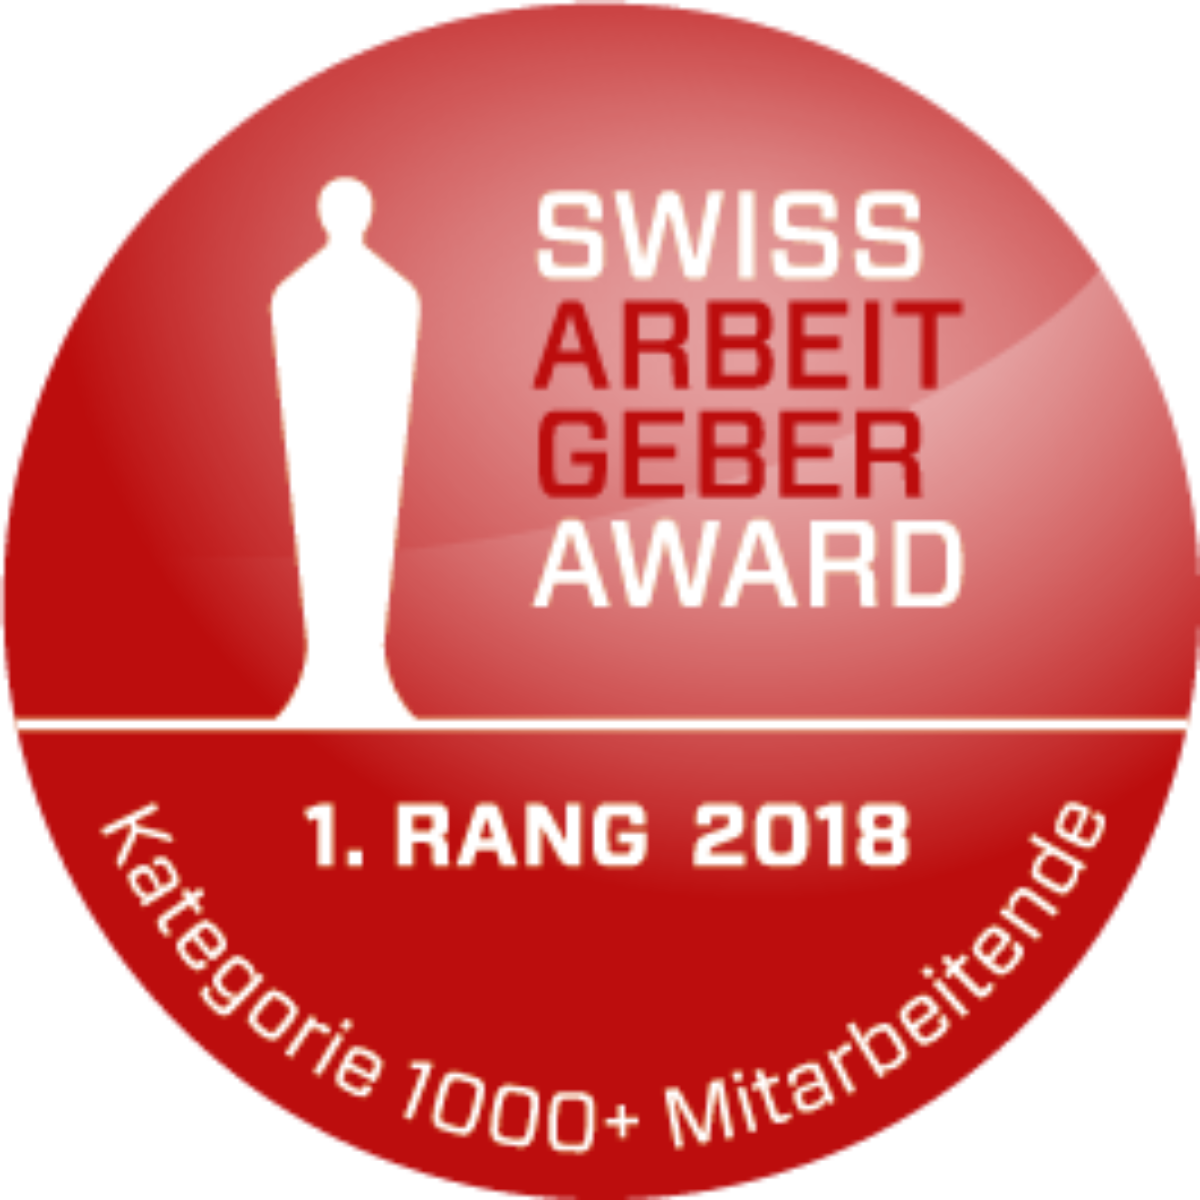 Swiss Arbeitgeber Award - 1. Rang 2018